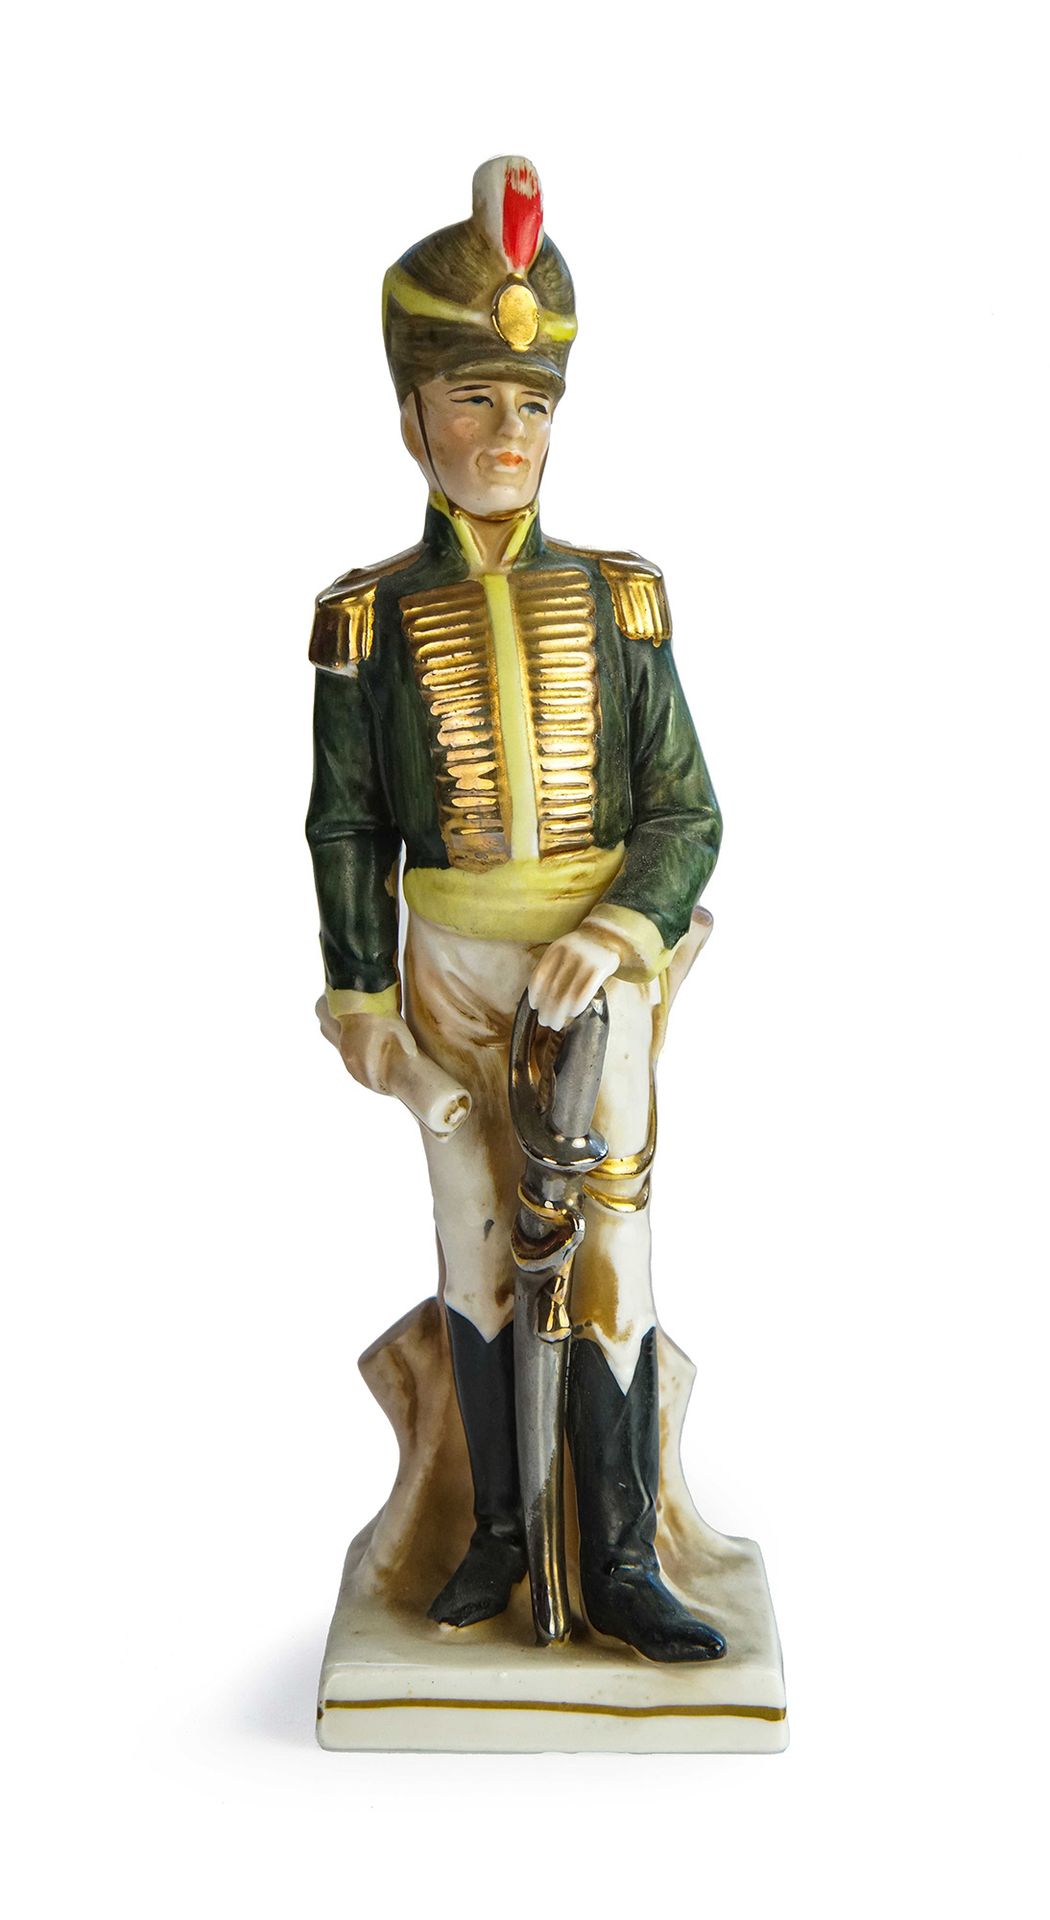 Null 描写拿破仑将军的雕像

多彩瓷器，Capodimonte型制造

高24.7厘米